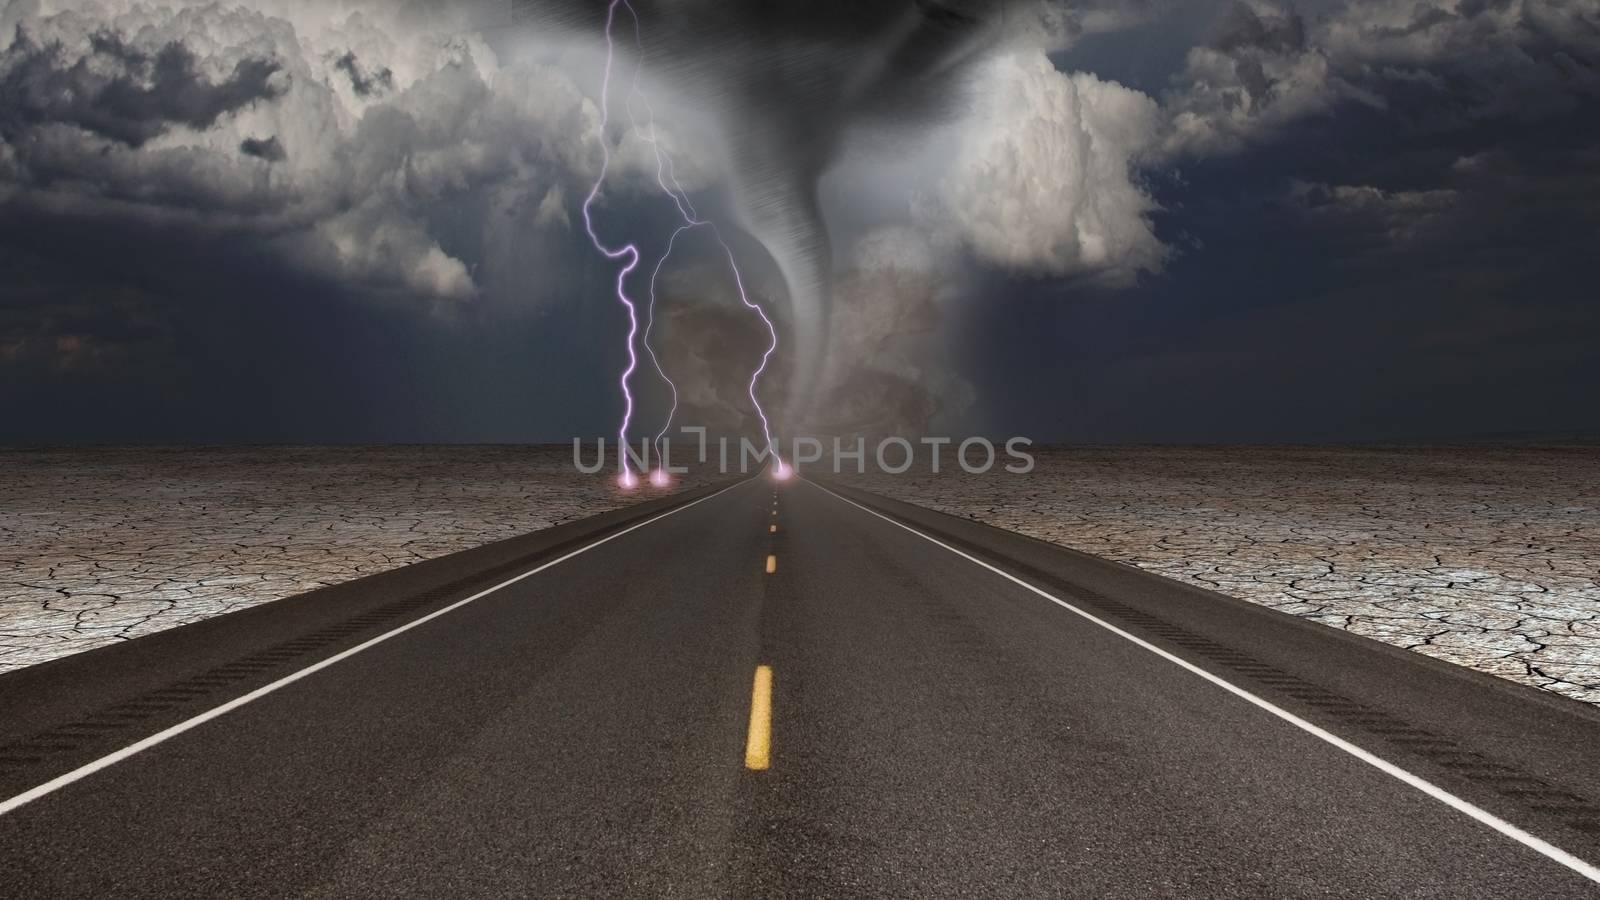 Tornado funnel in desert road landscape. 3D rendering